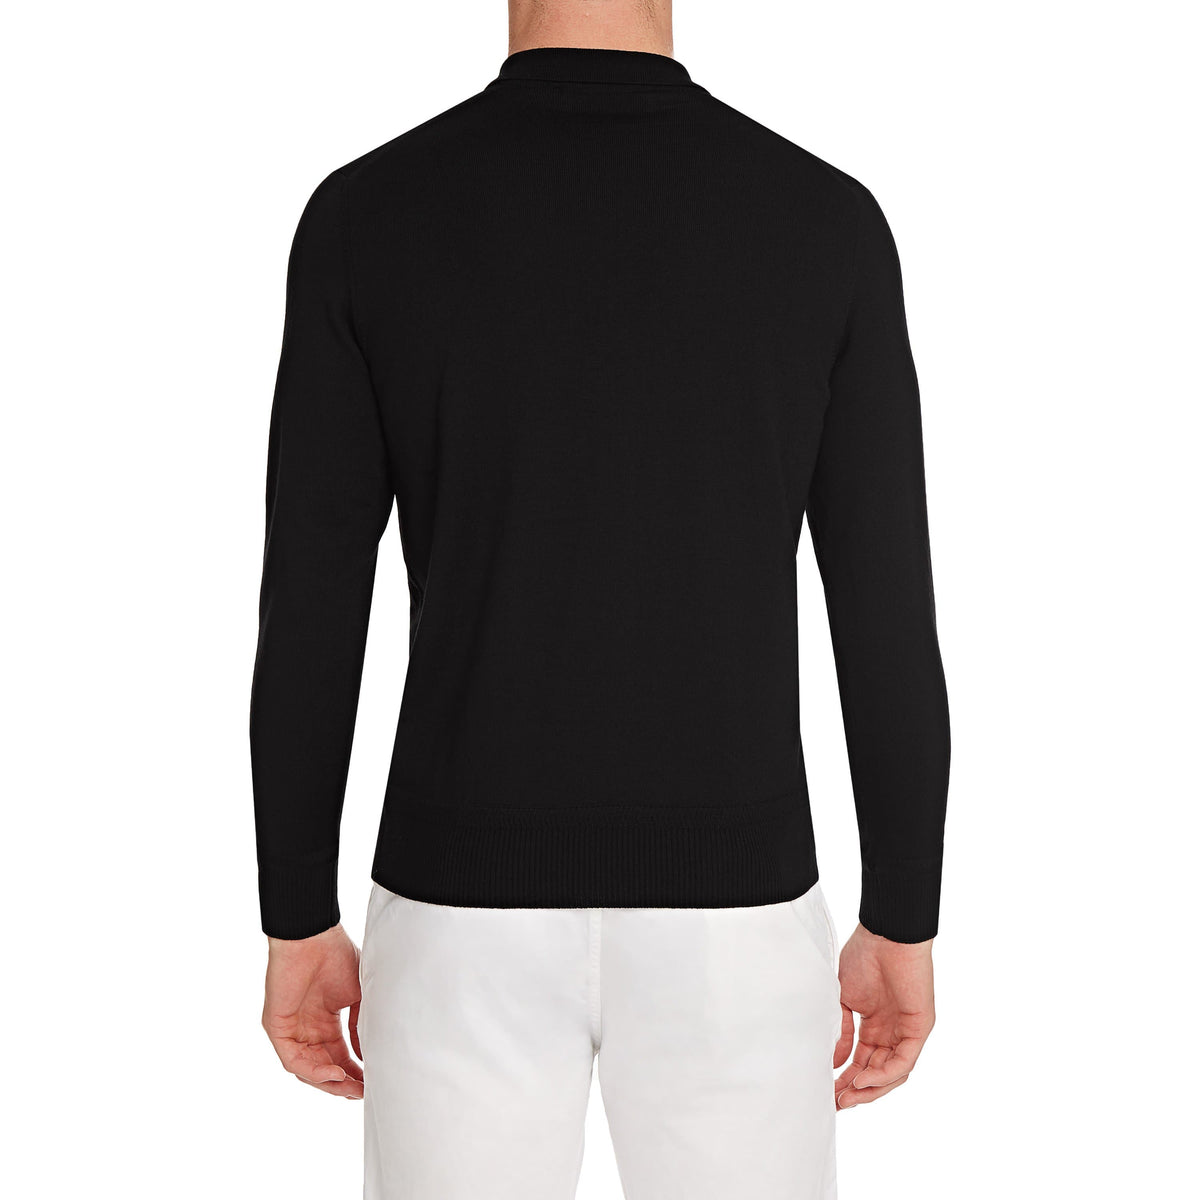 Half-Zip Merino Knit Shirt - Moonraker Edition - By Orlebar Brown - 007STORE